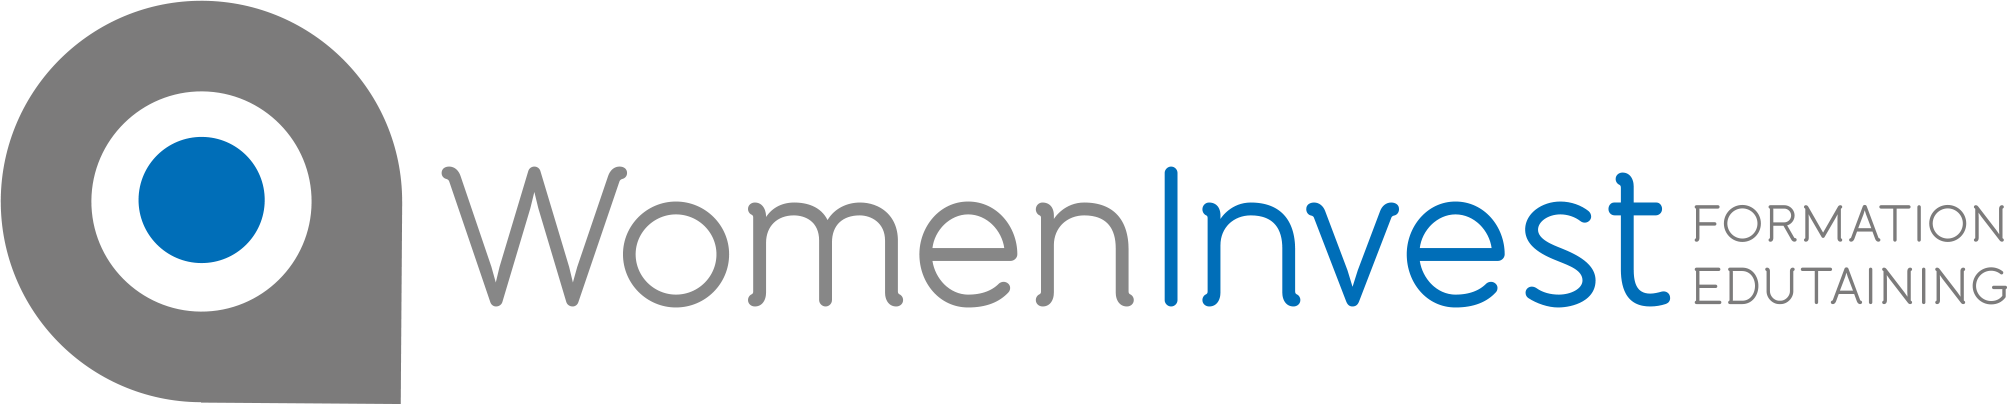 FORMATION_WomenInvest_logo_bleu